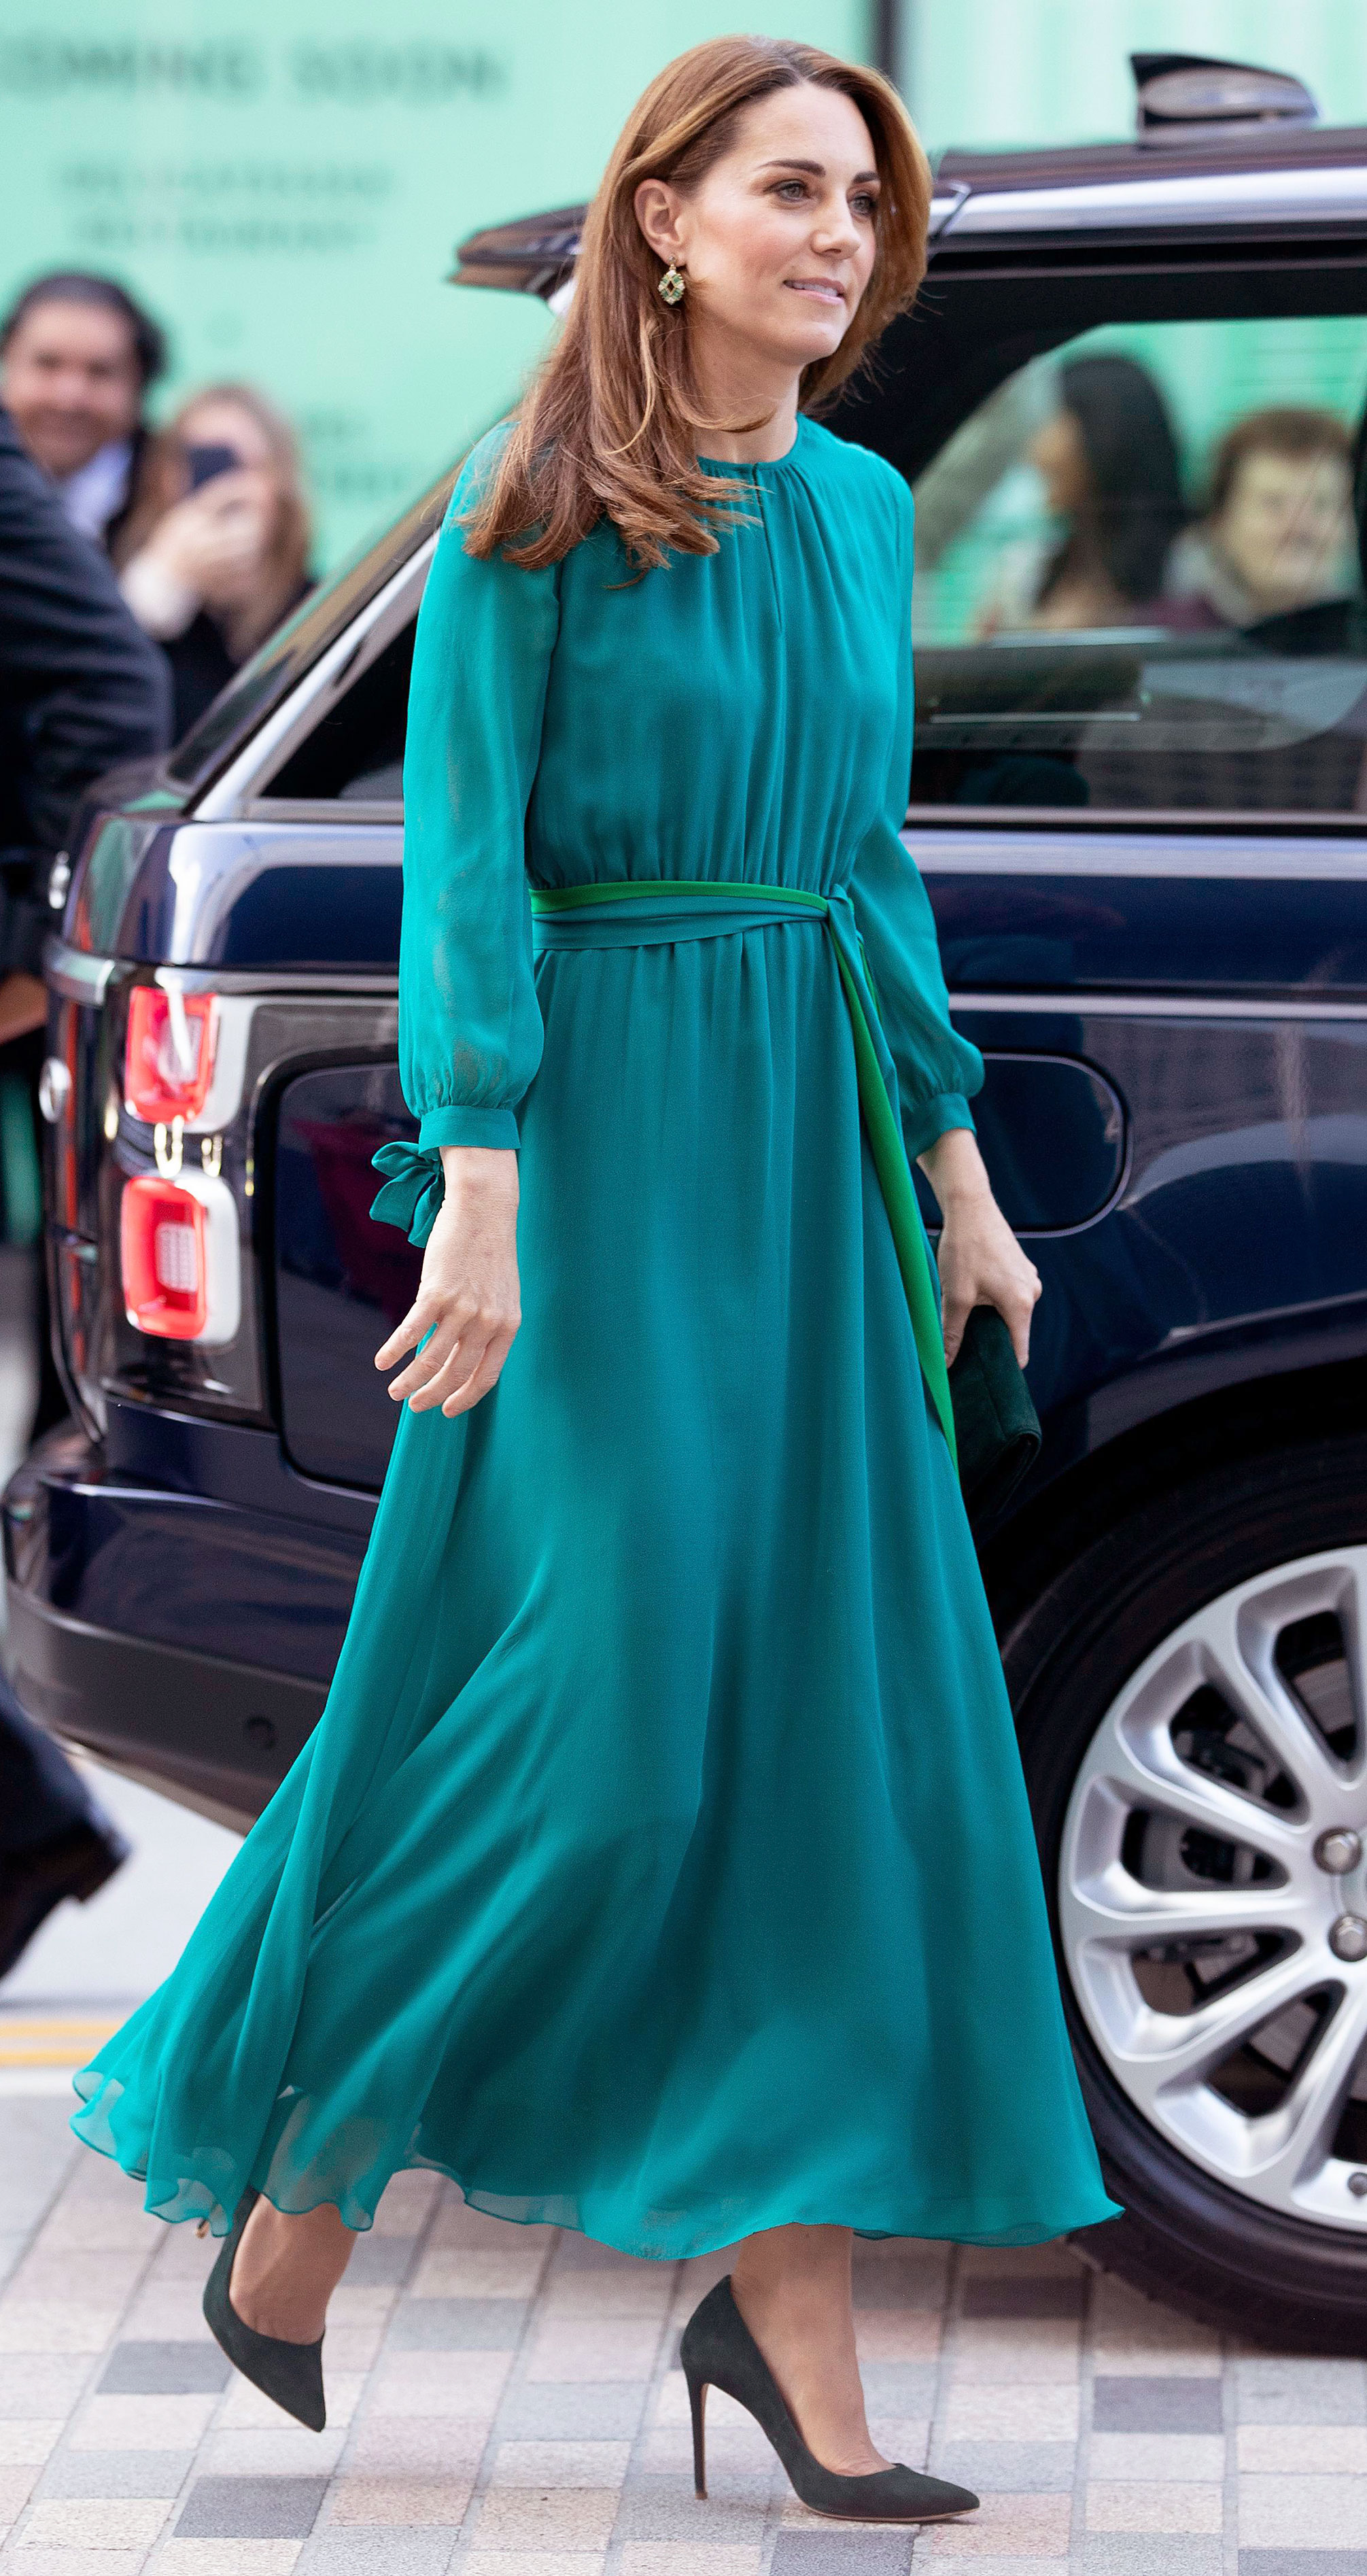 Wedding dress of Catherine Middleton - Wikipedia